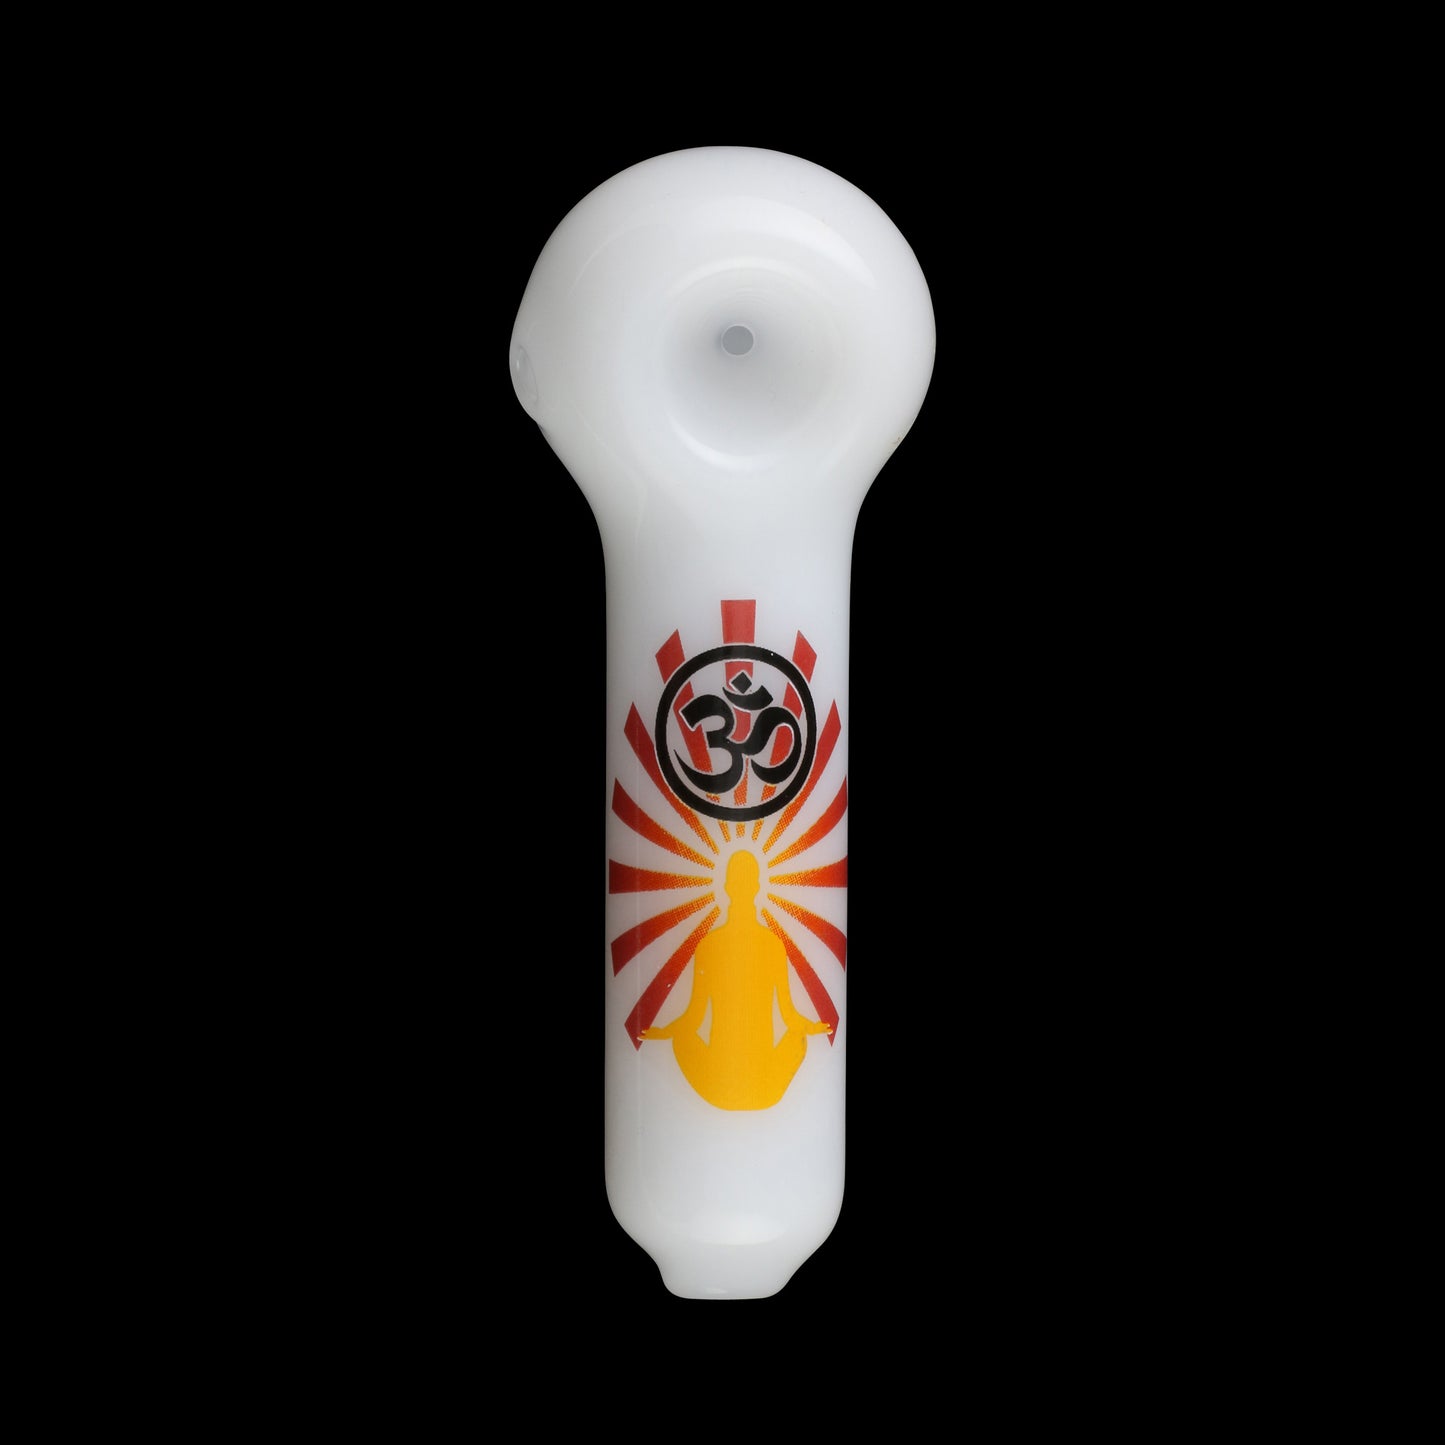 Namaste BOL Glass Pipe by Chameleon Glass